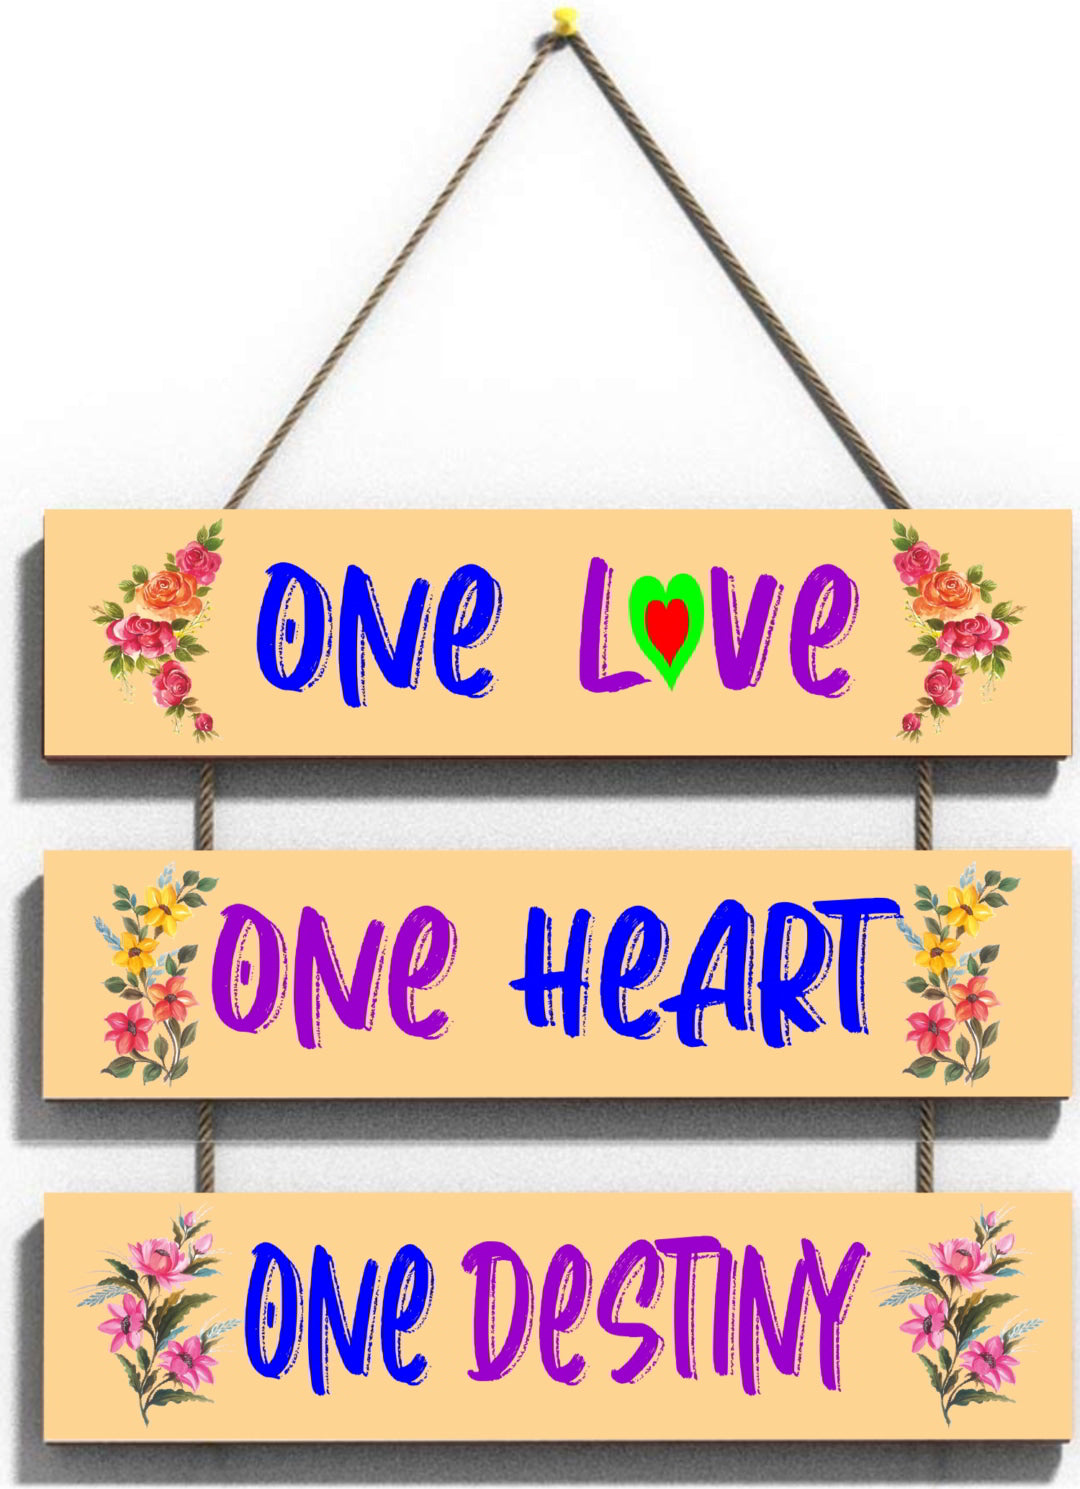 One Love-Heart-Destiny Wall Hanging Board